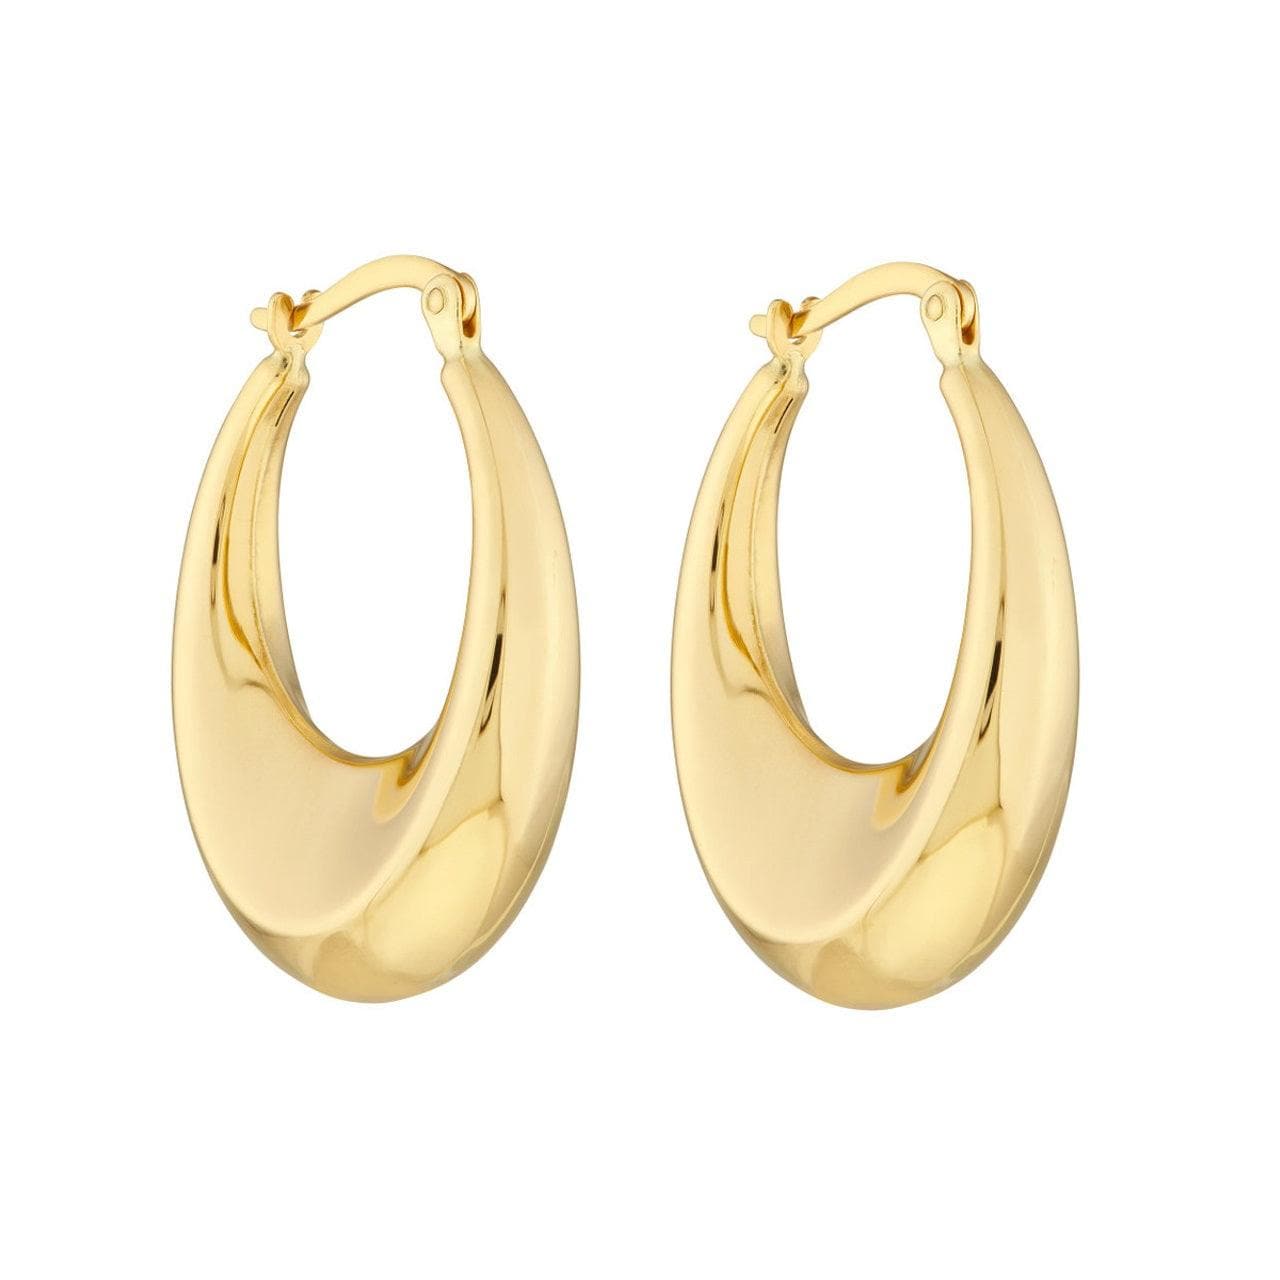 OLE 0486 -18K Gold Filled Oro Laminado EARRINGS, NEW - KUANIA